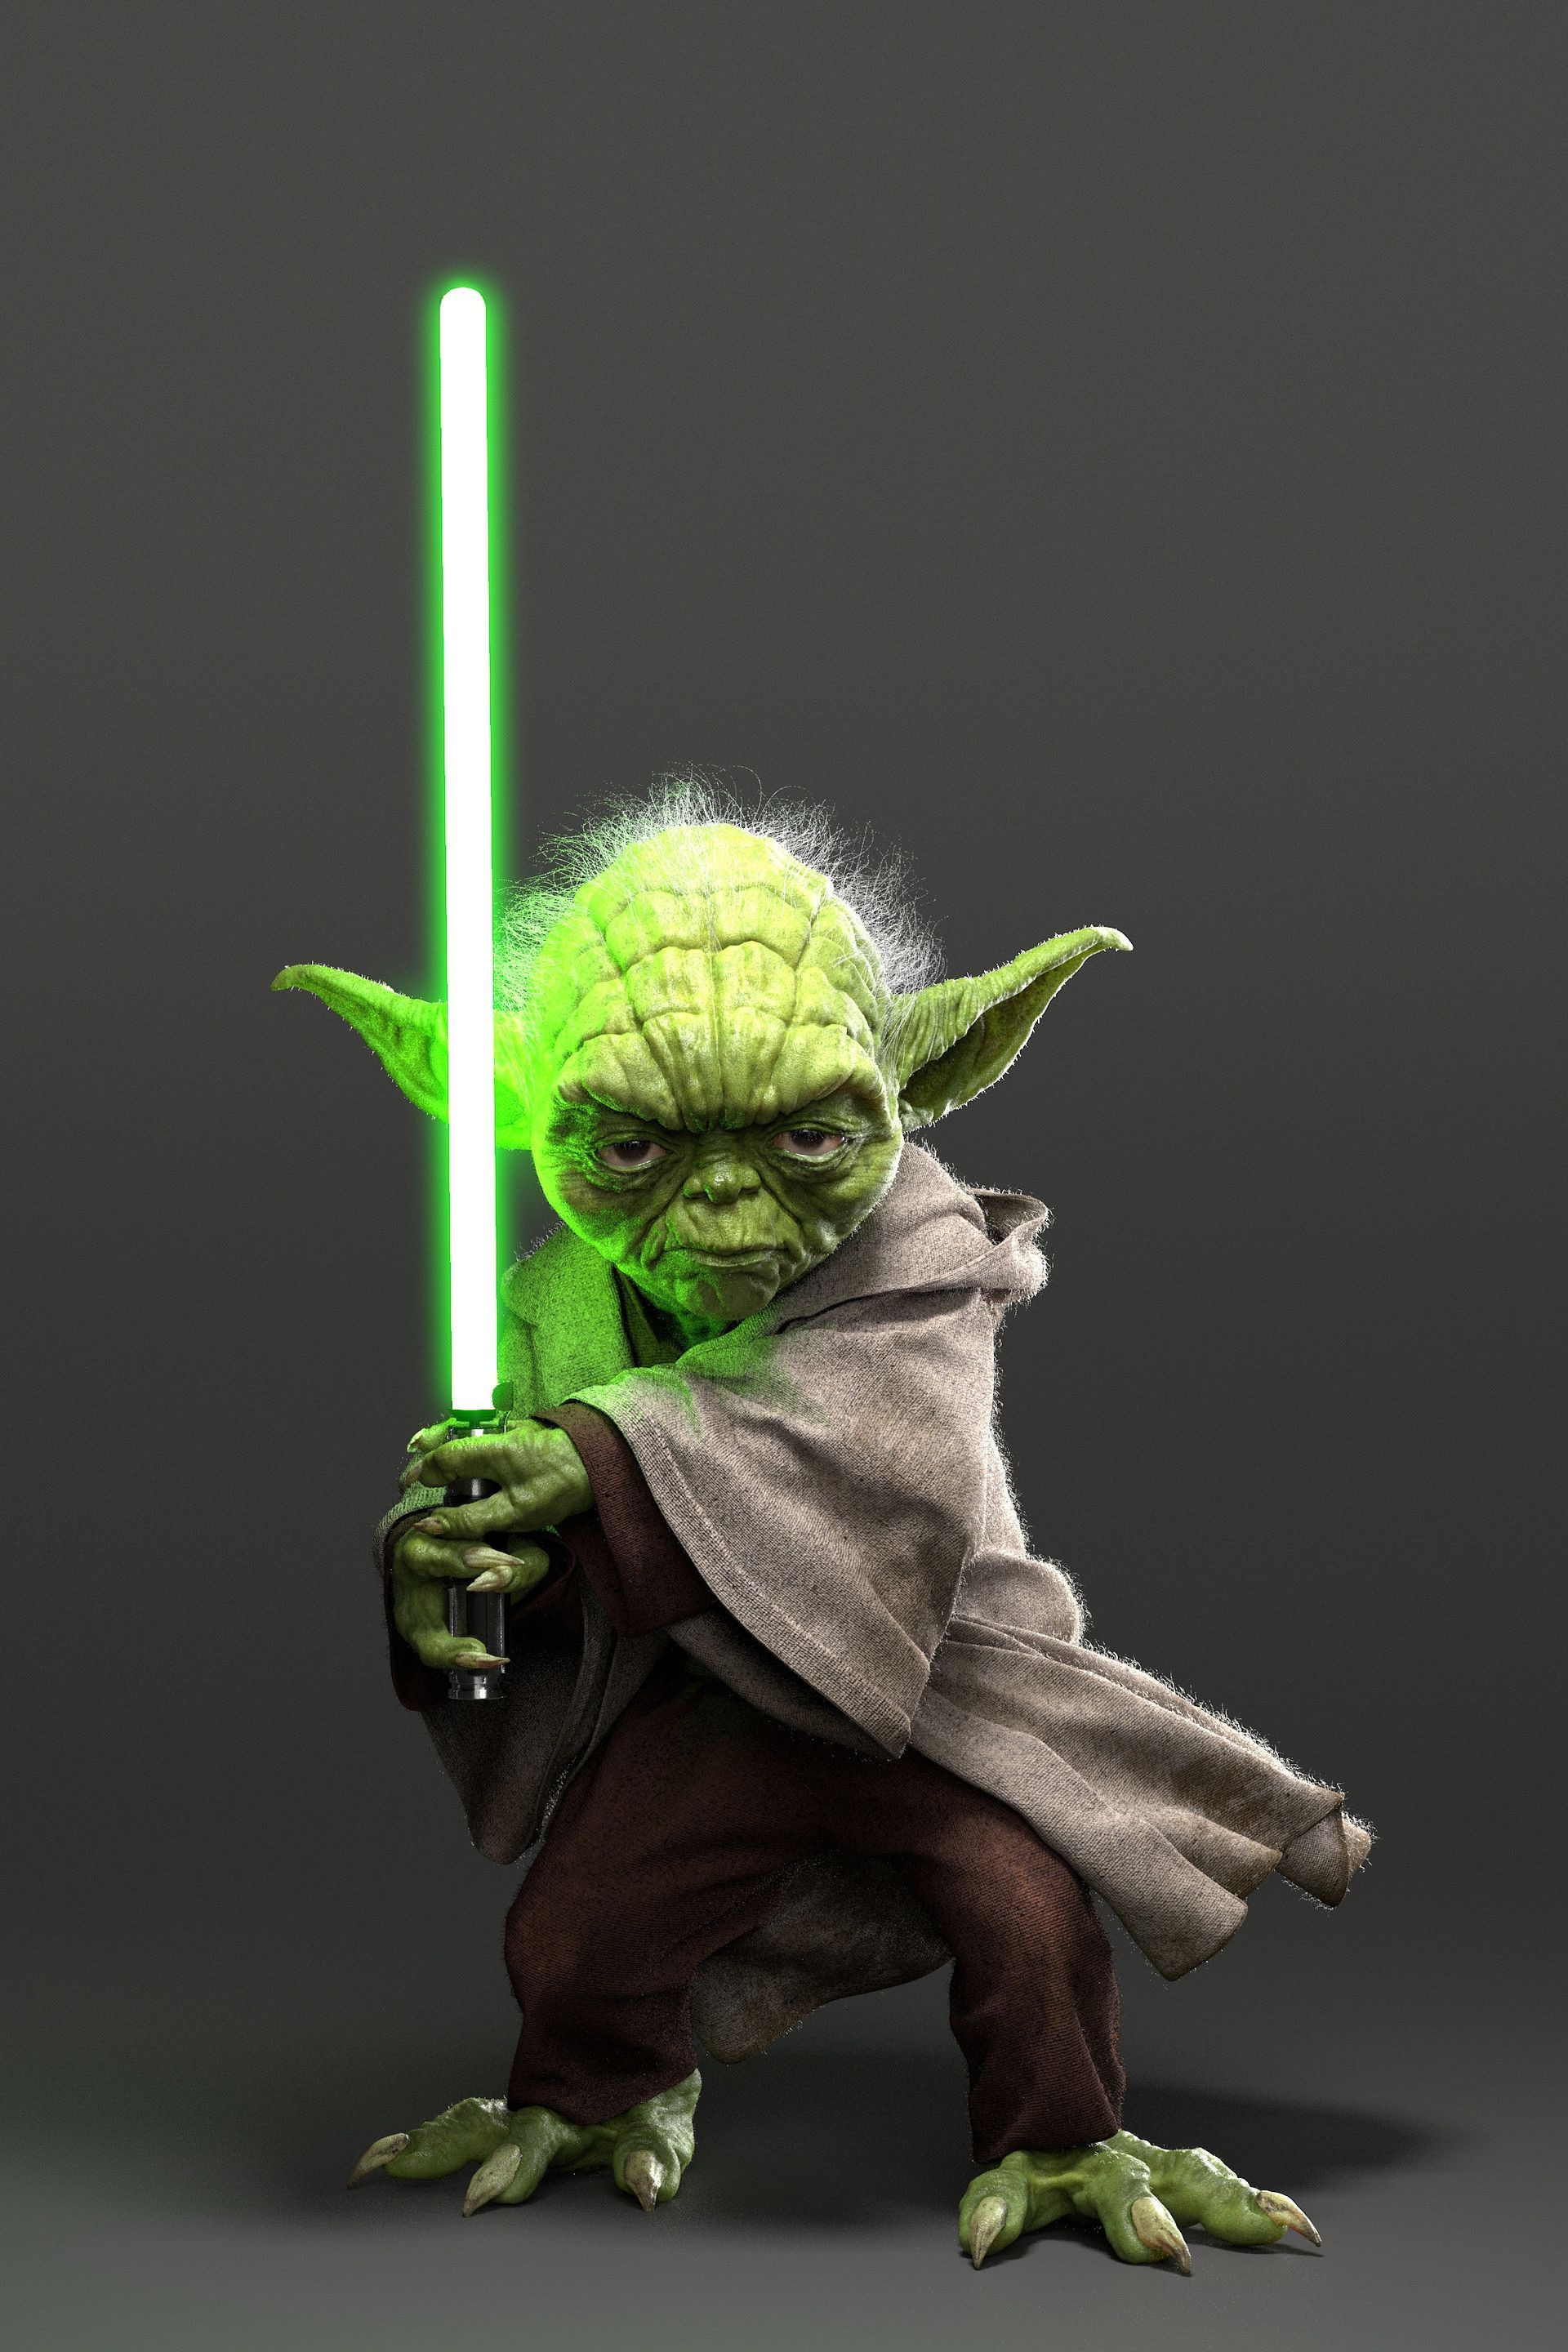 Master Yoda Wars, sujung kwon. Star wars picture, Star wars movies posters, Star wars background